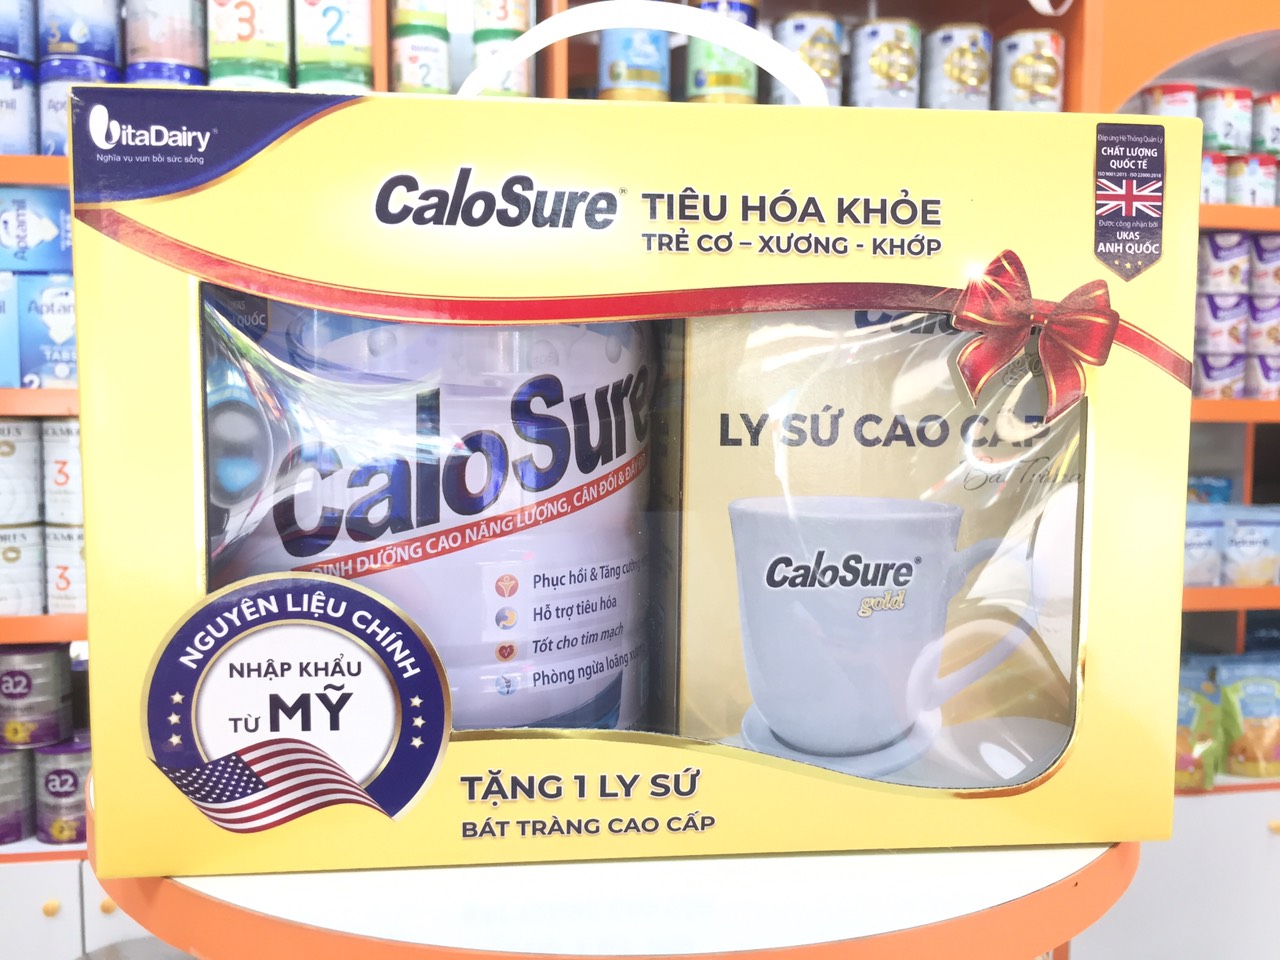 Sữa CaloSure 900g Vitadairy _ Dinh dưỡng cho người cao tuổi